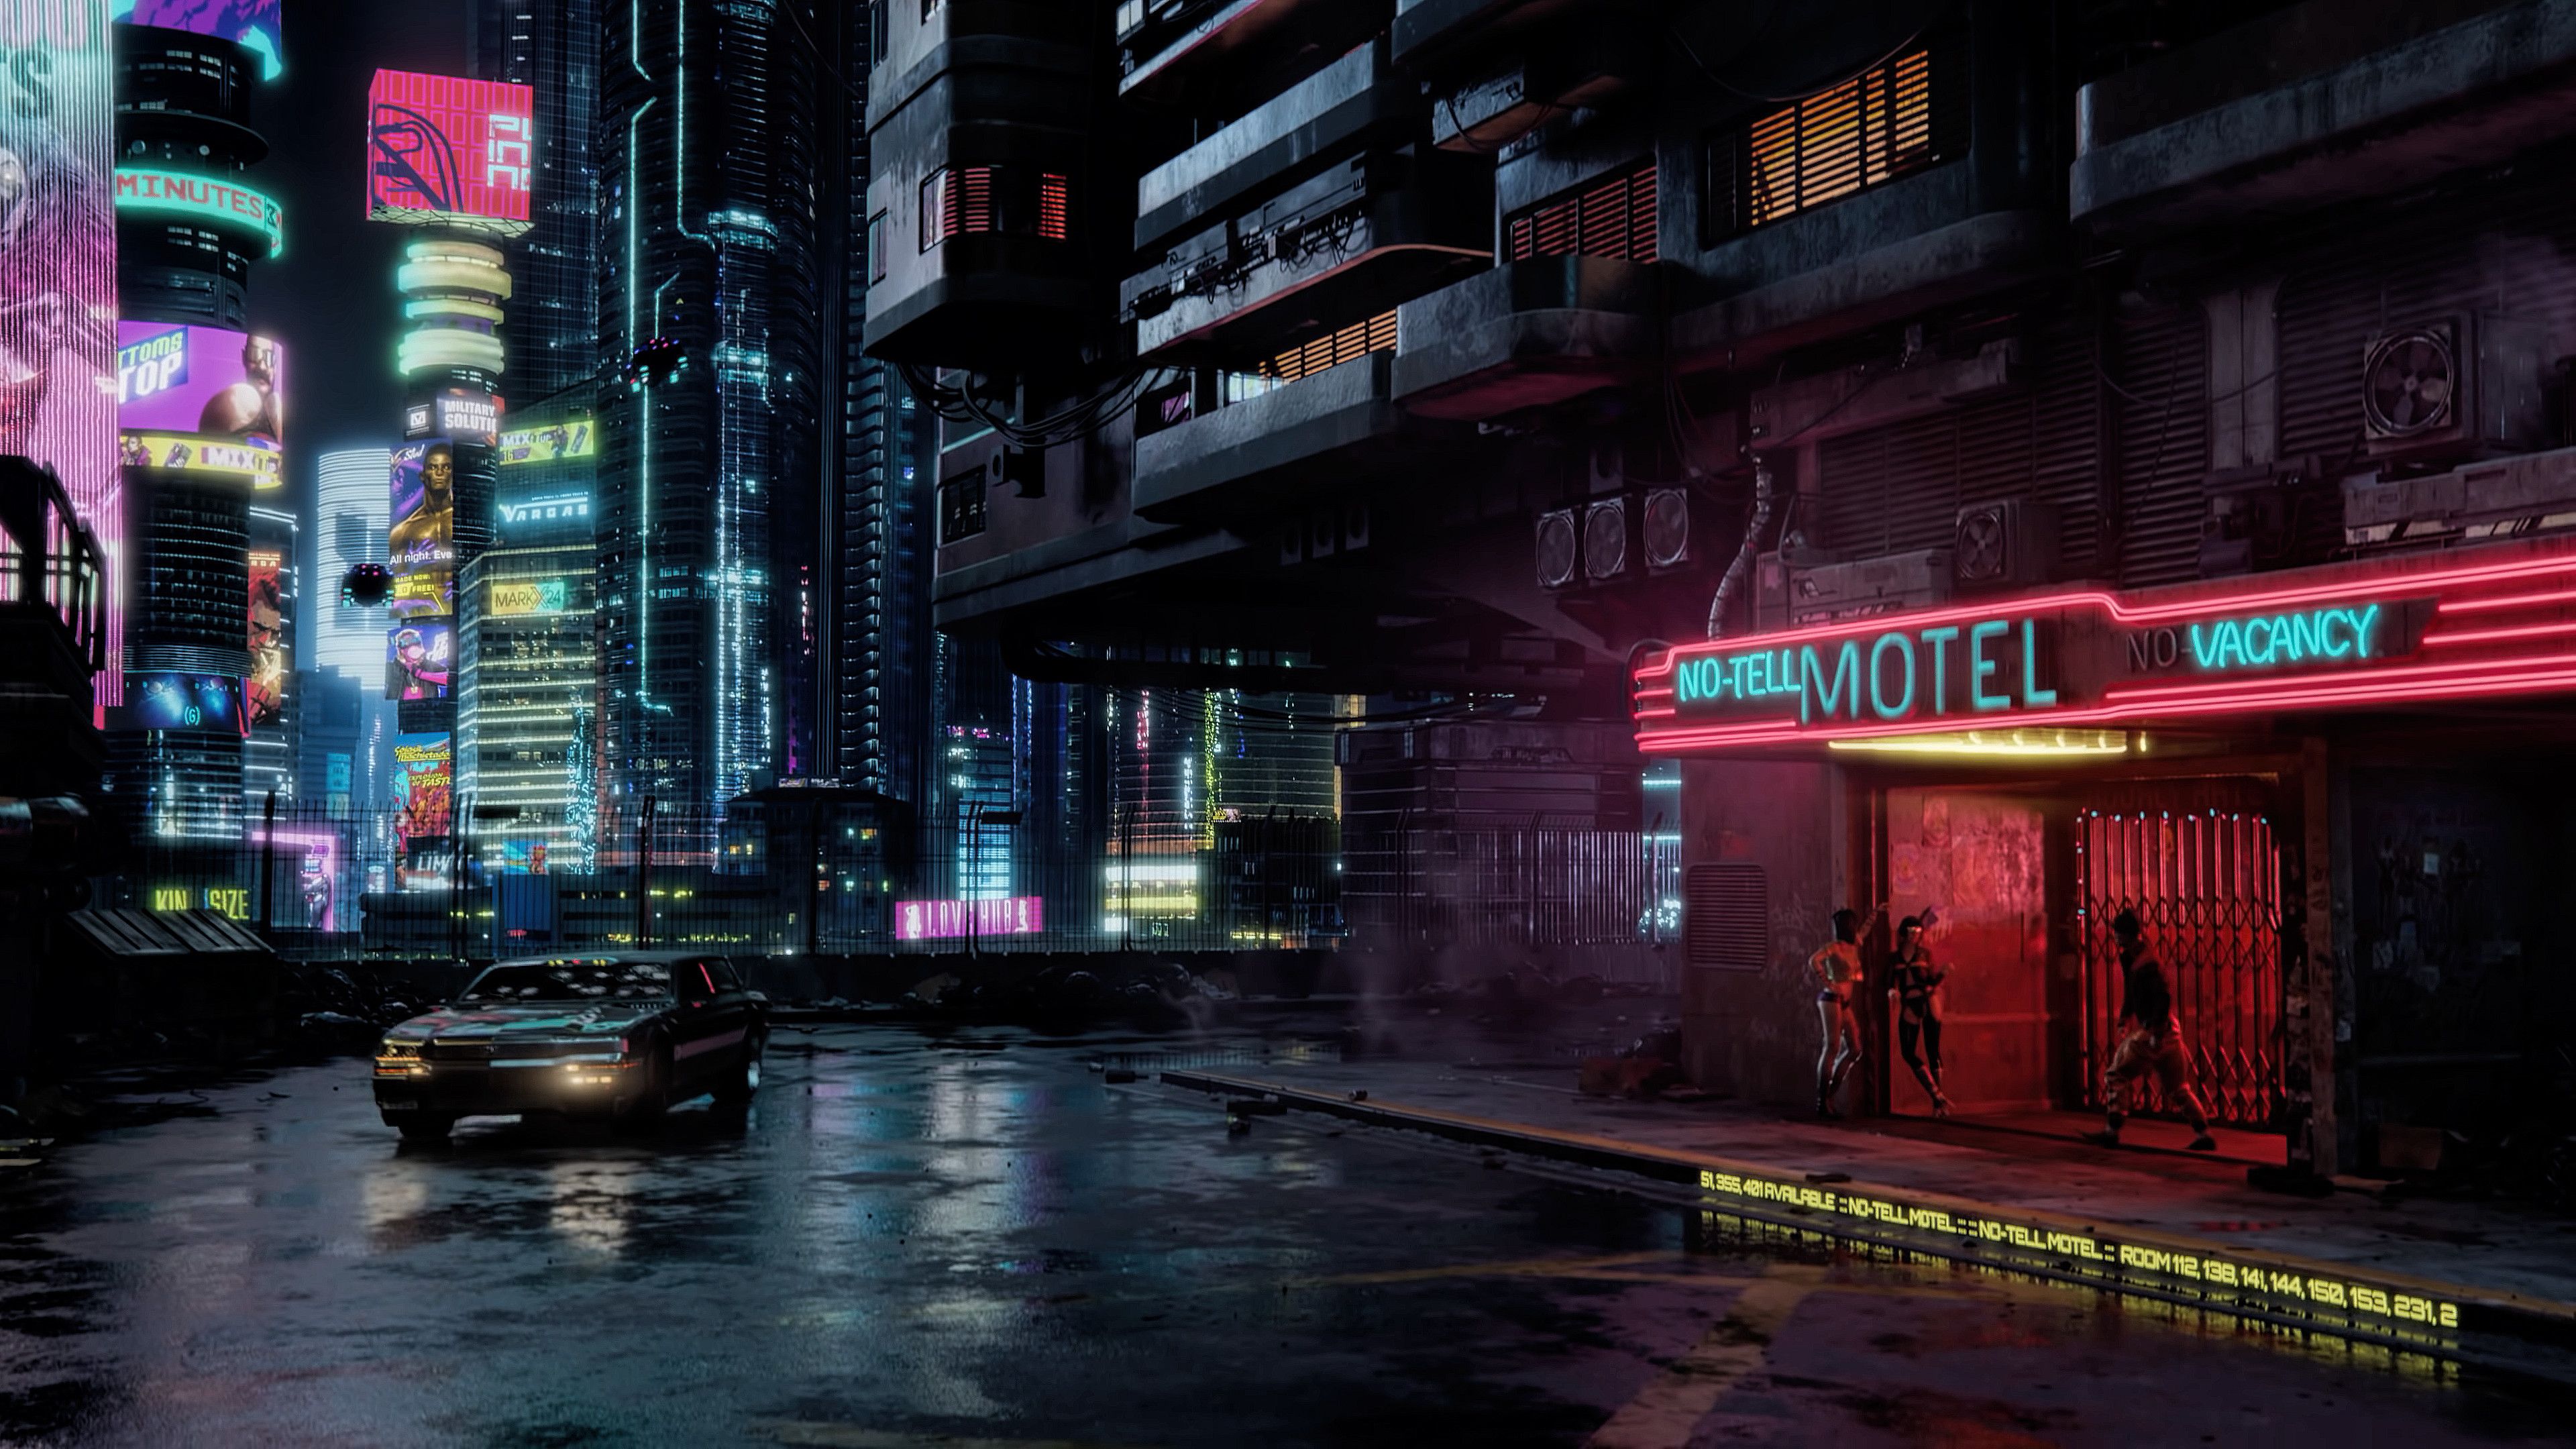 Night City (Cyberpunk 2077) wallpapers for desktop, download free